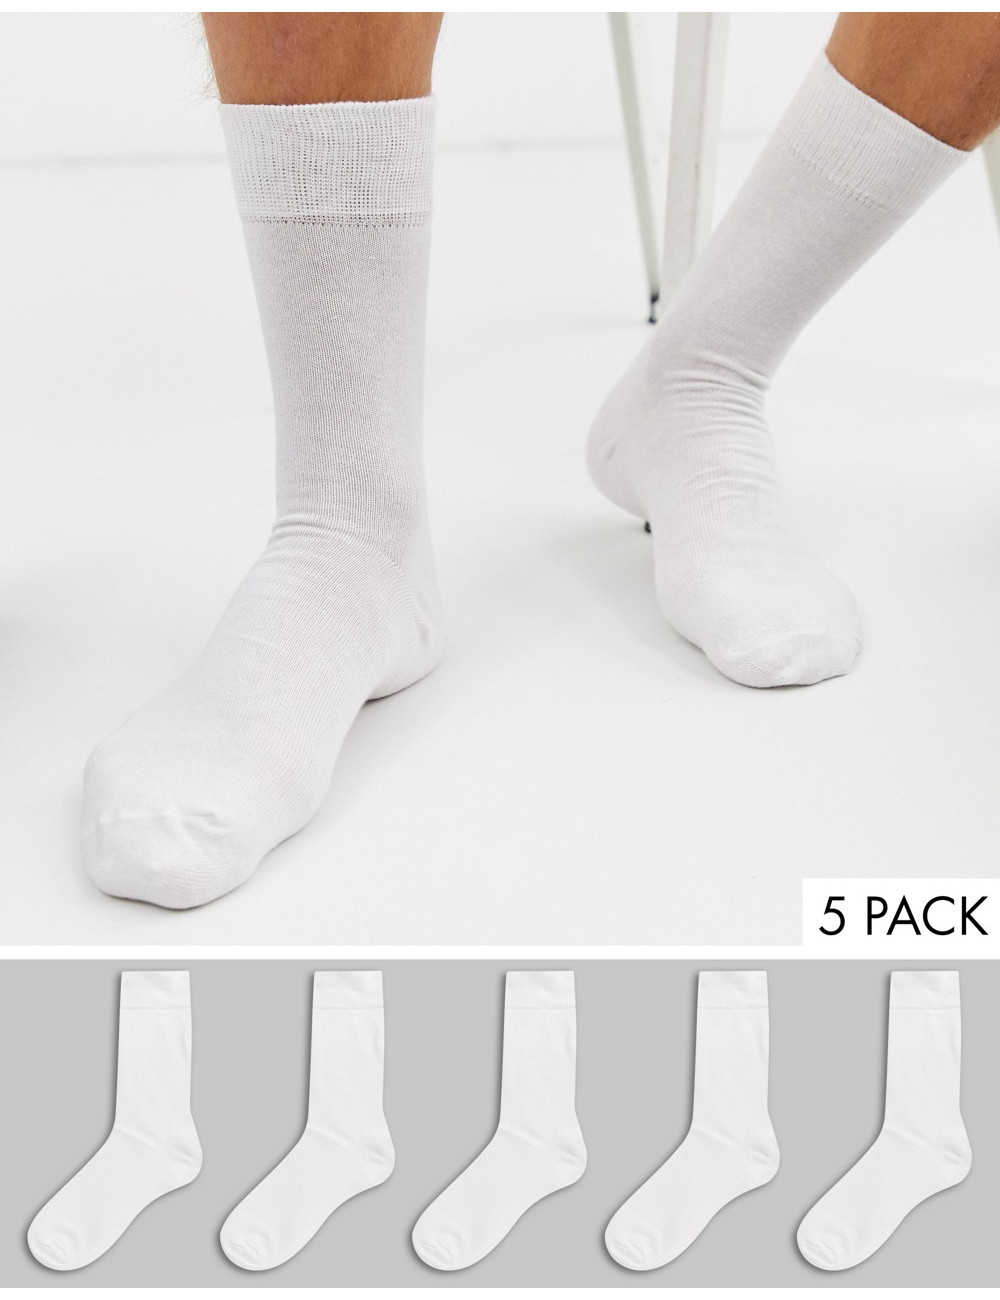 New Look socks in white 5 pack